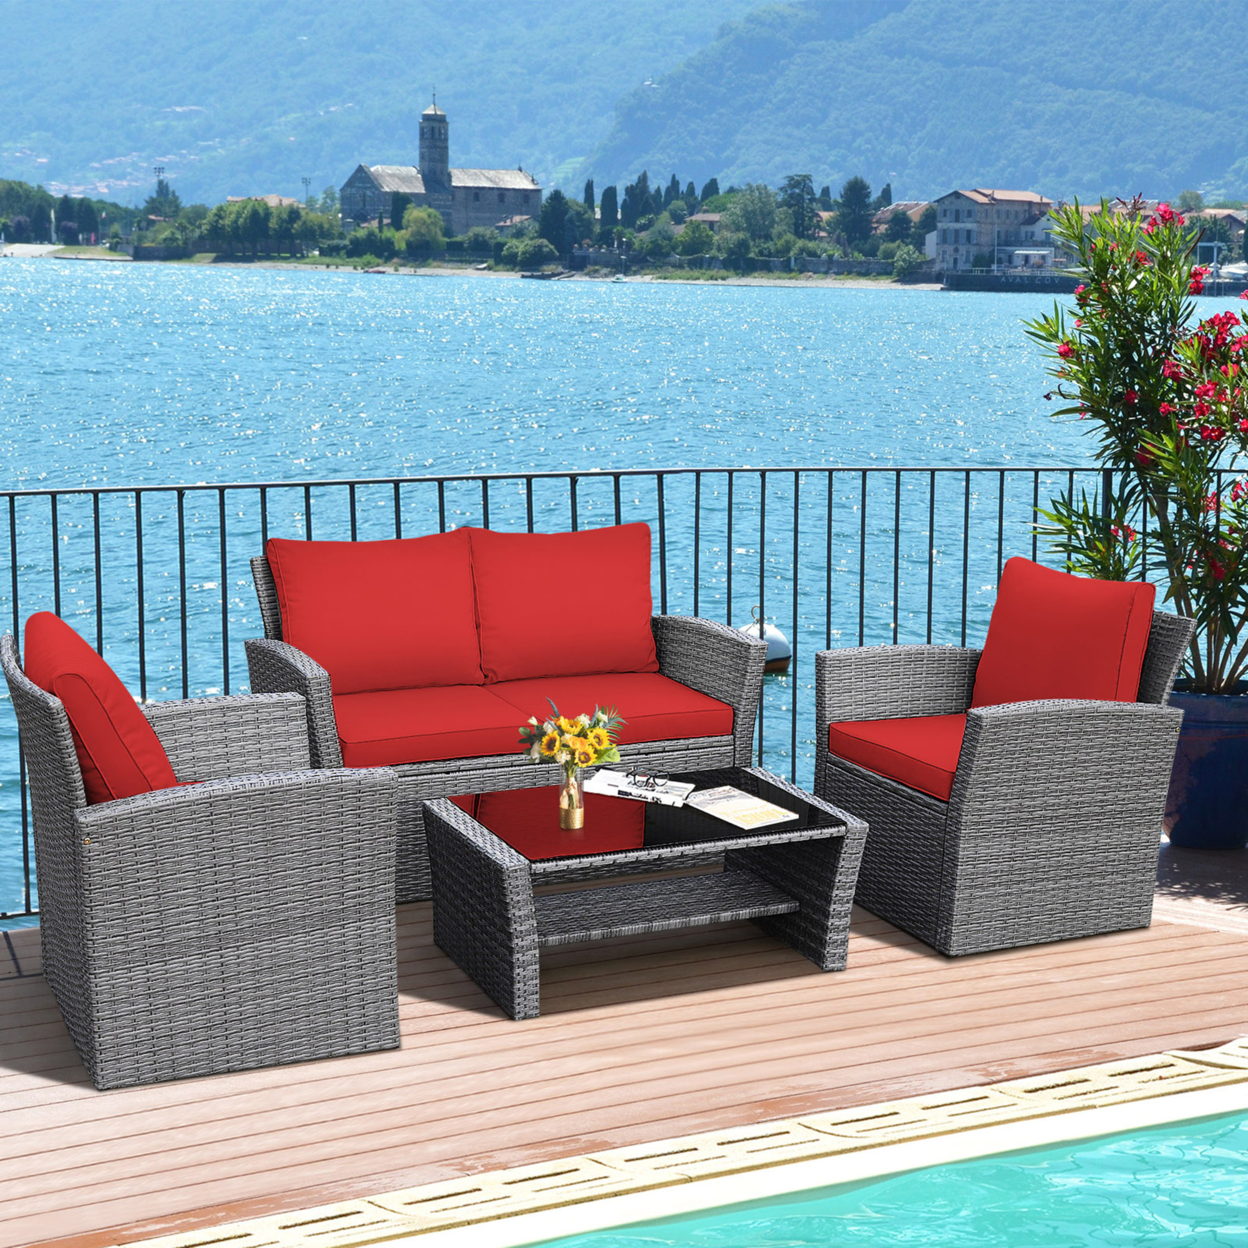 4PCS Patio Rattan Conversation Set Outdoor Furniture Set W/ Red Cushions